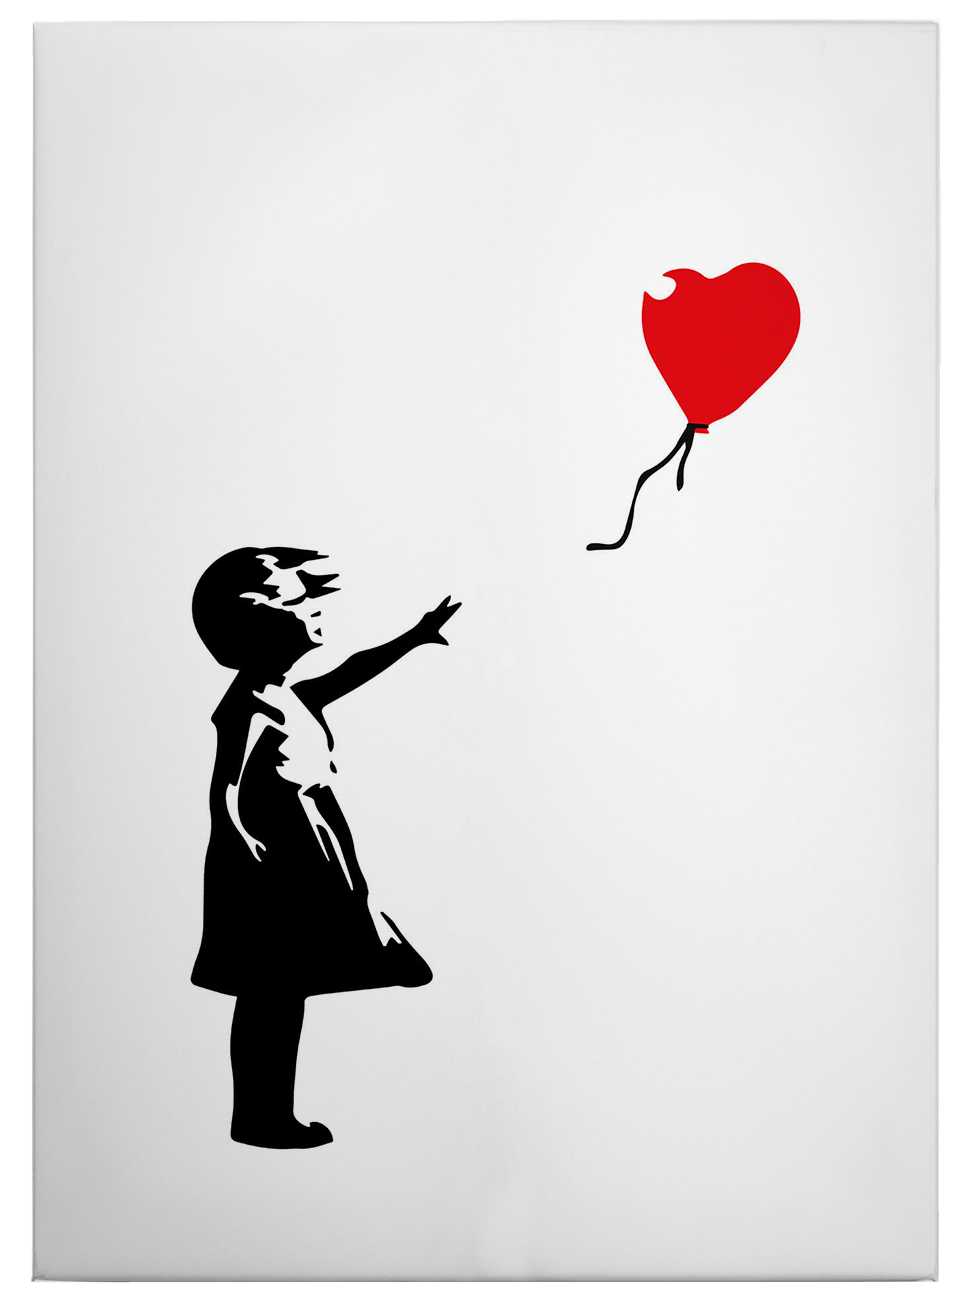             Cuadro en lienzo "Chica con globo rojo" de Banksy - 0,50 m x 0,70 m
        